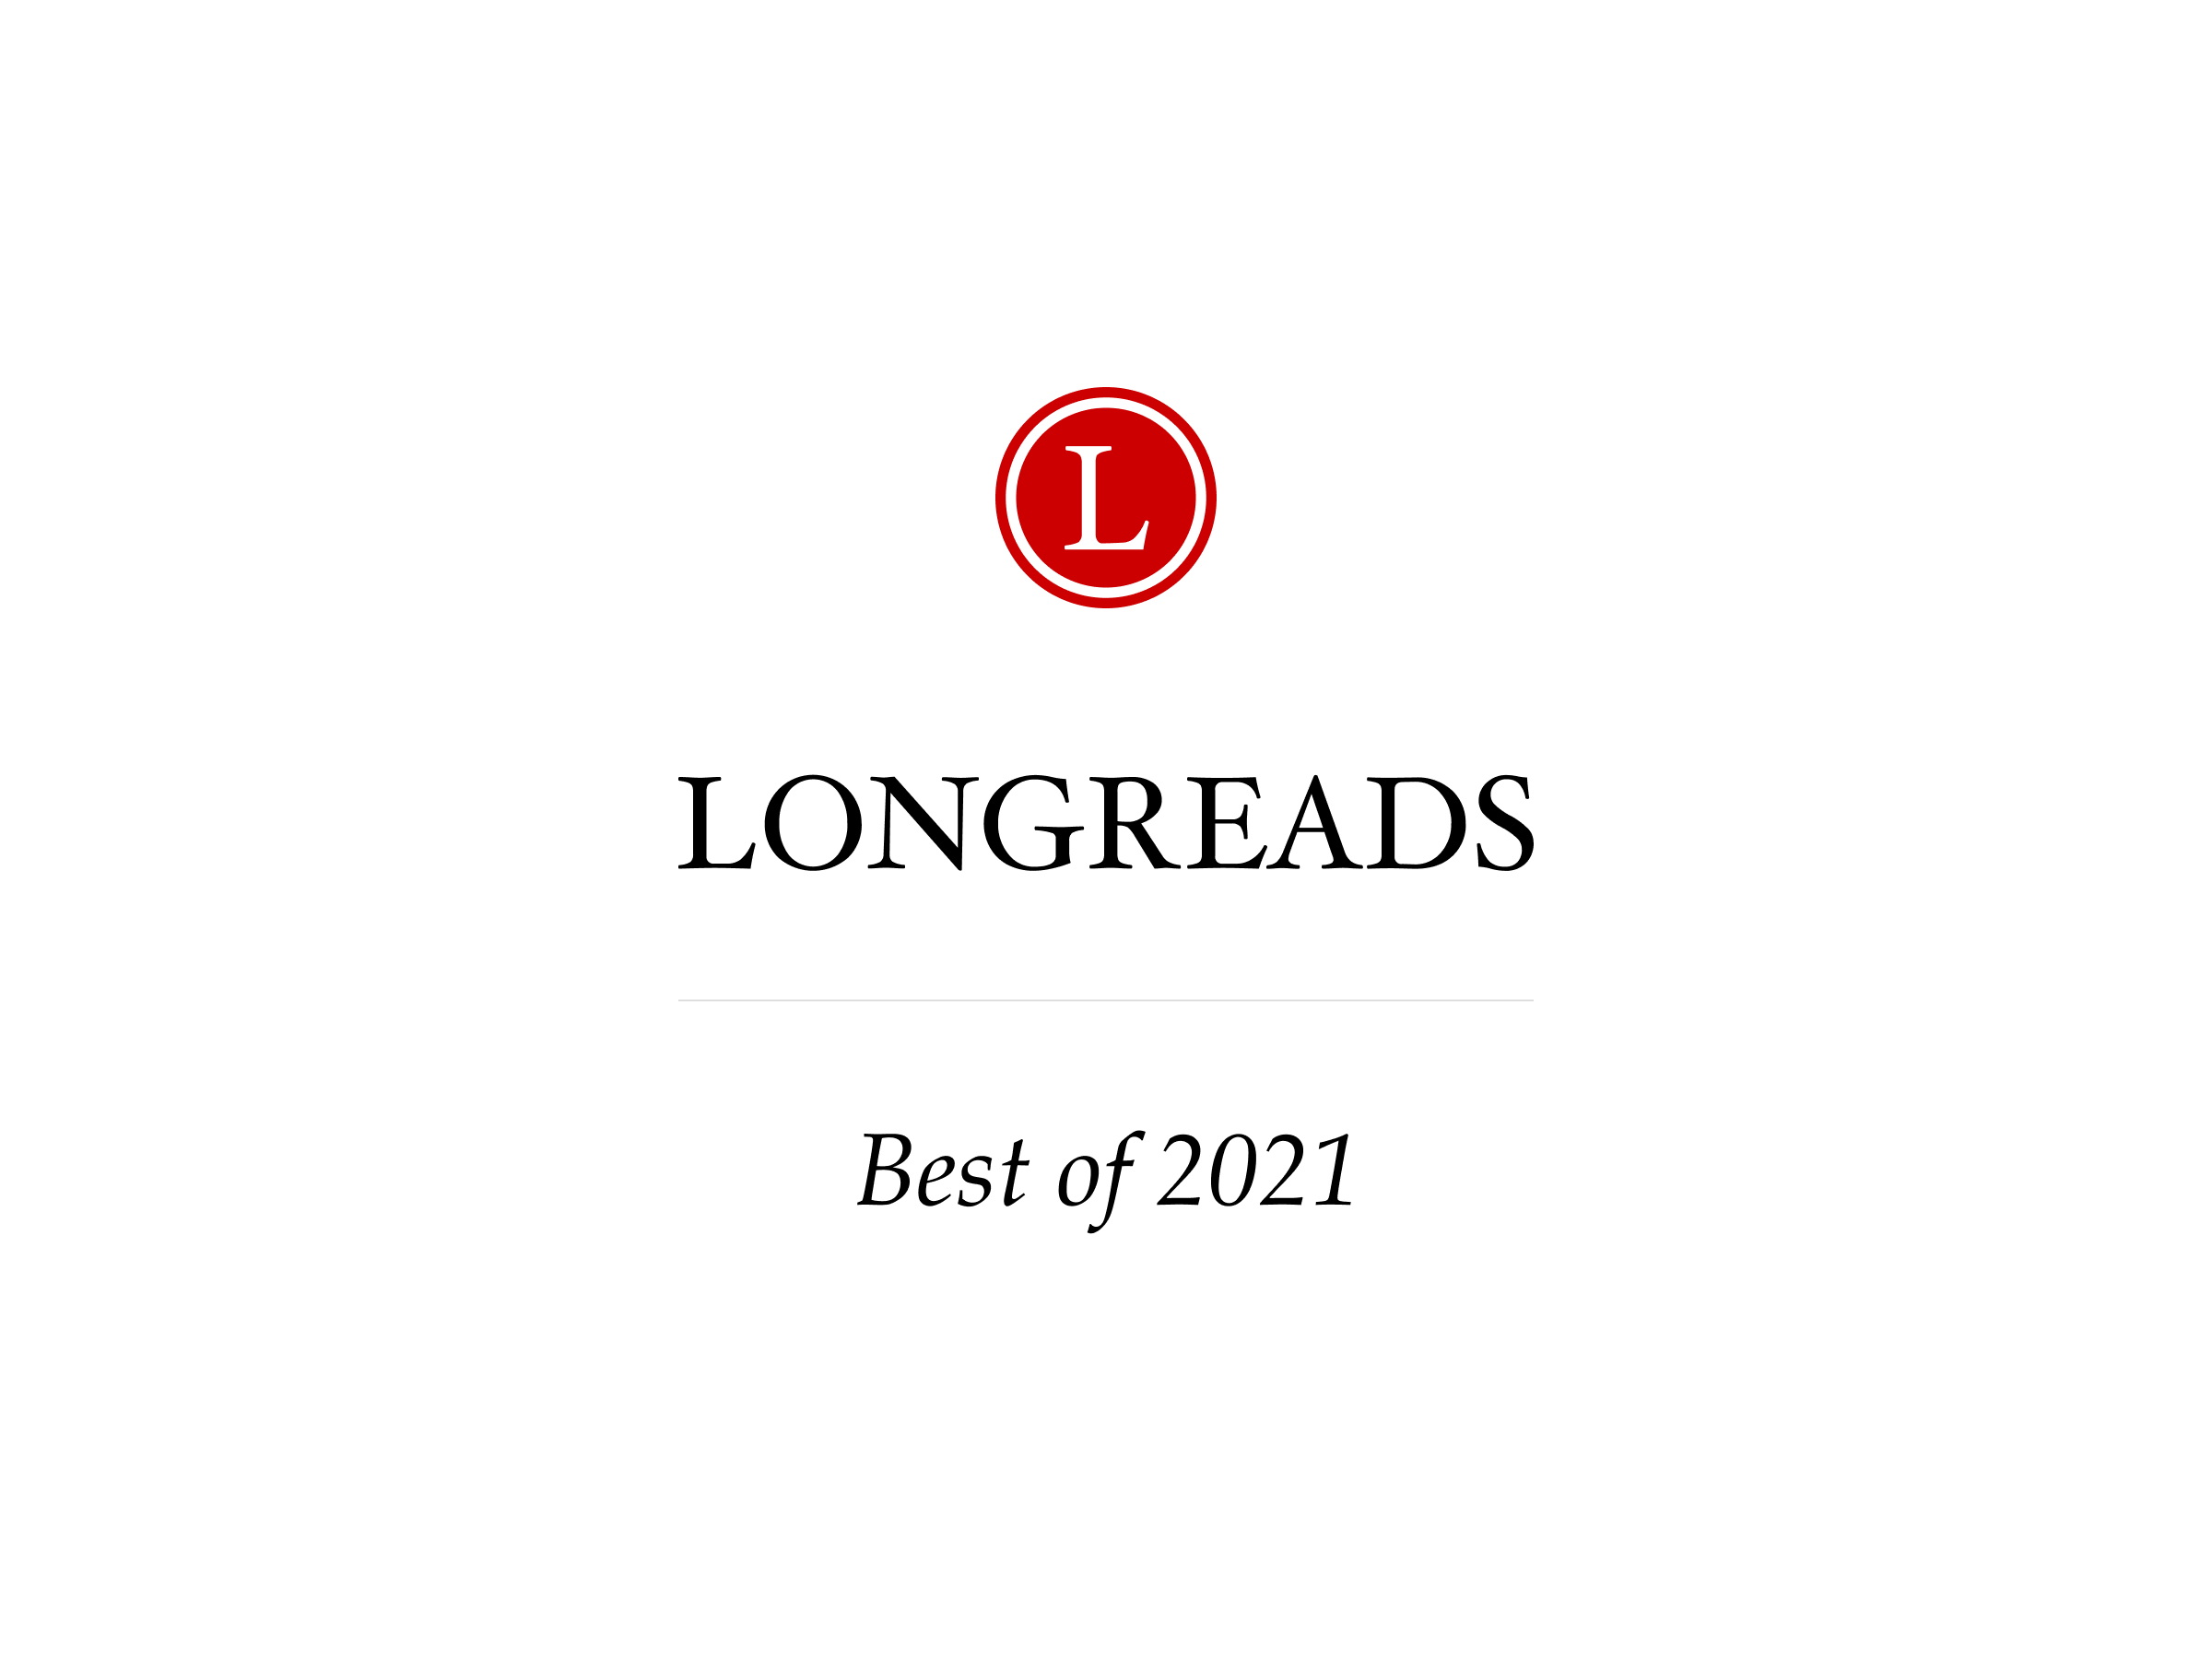 Longreads Best of 2021 Project